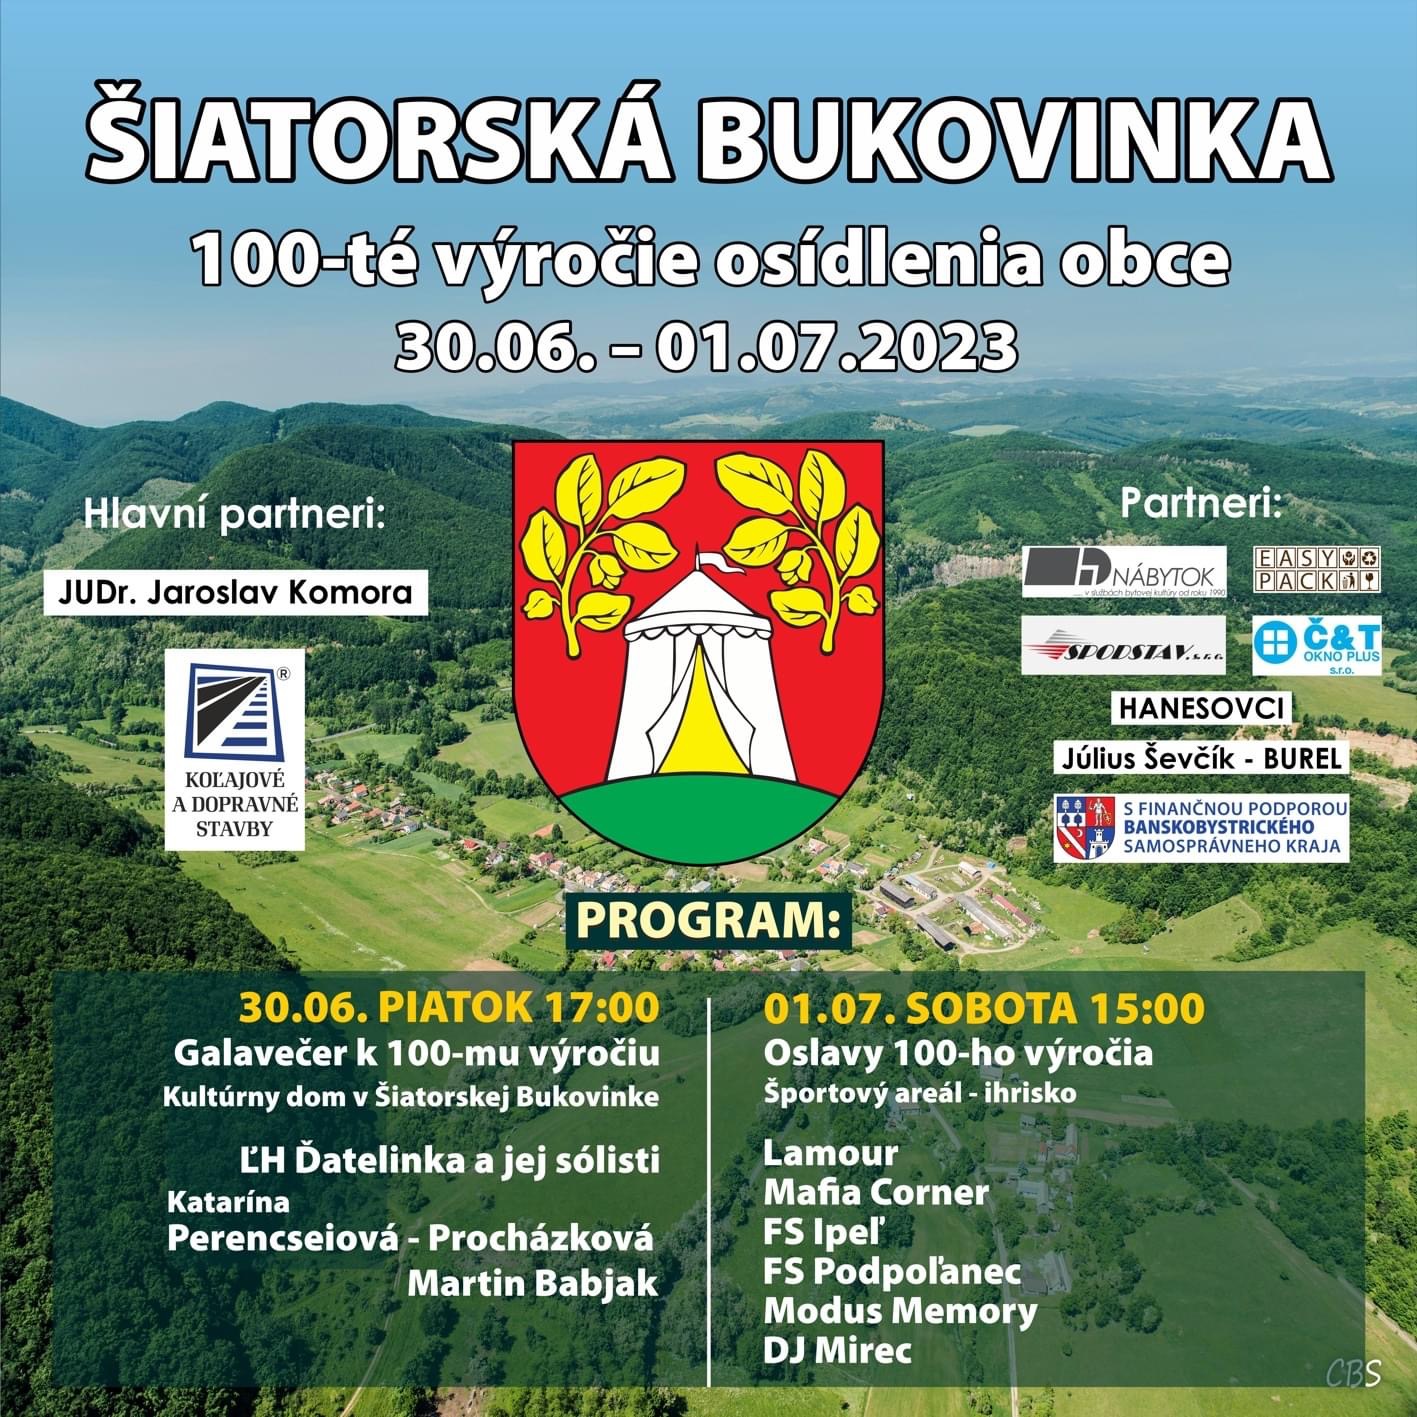 iatorsk Bukovinka 2023 - 100-t vroie osdlenia obce